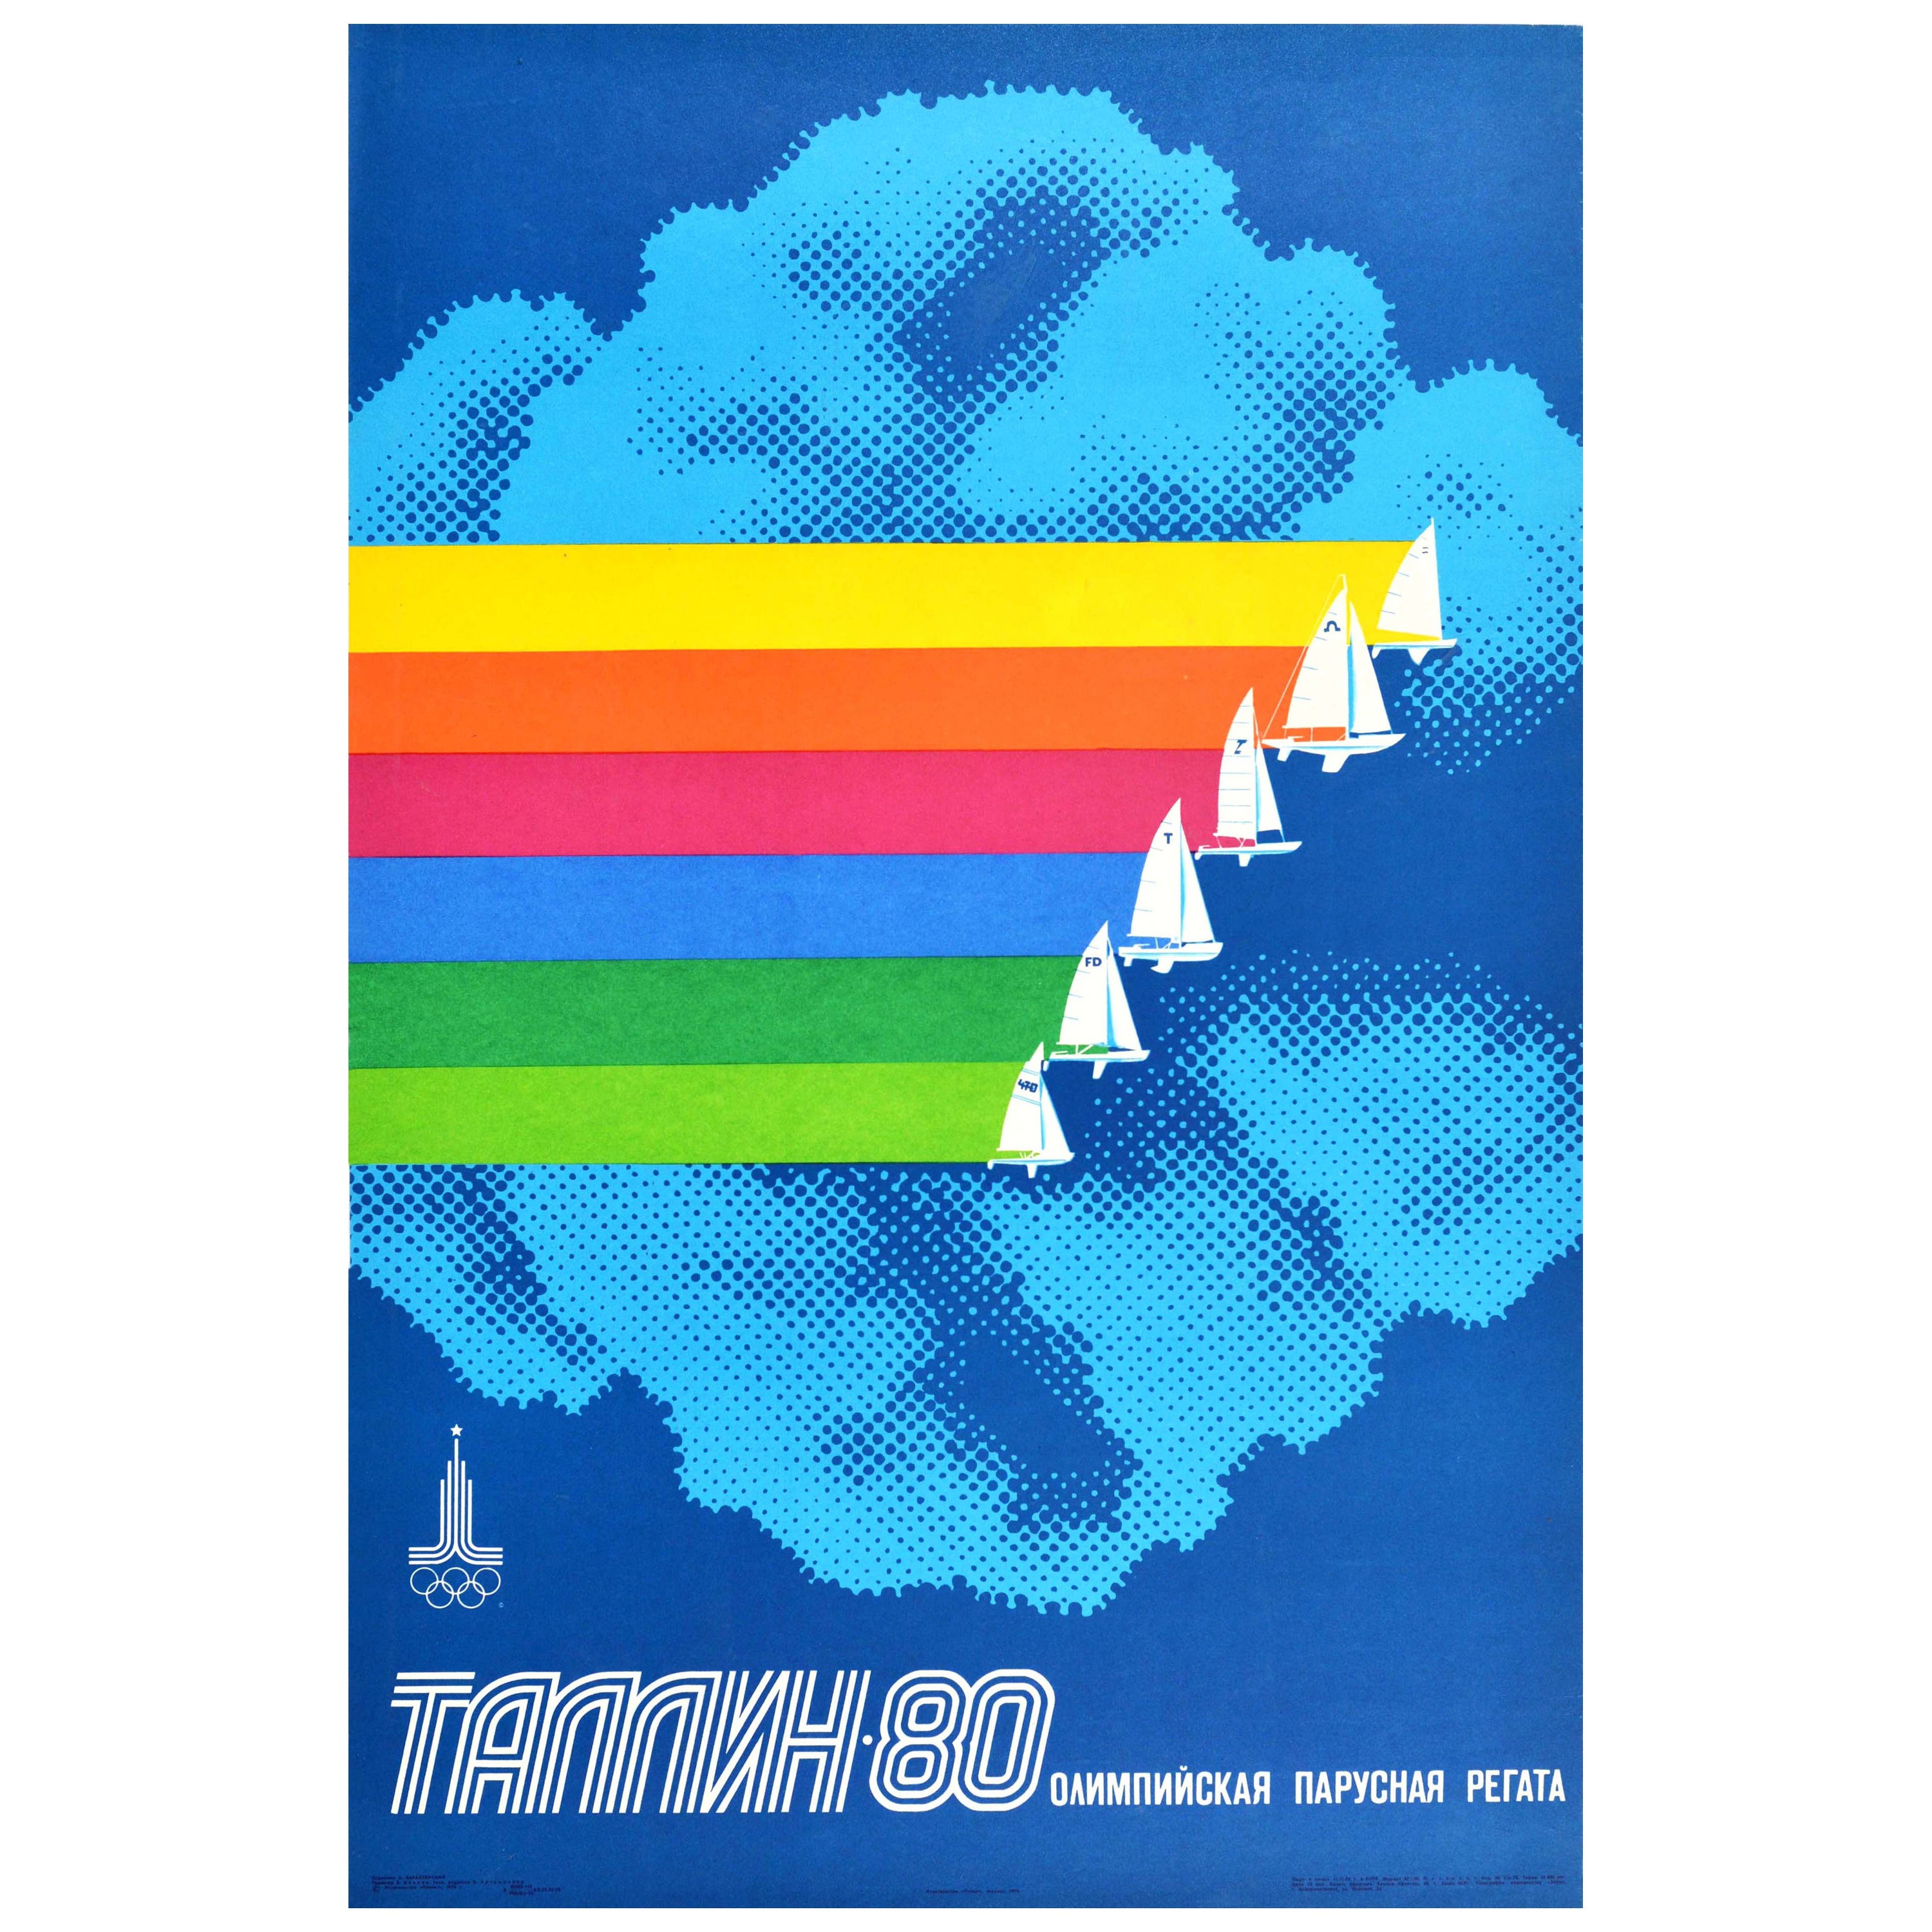 Original Vintage Sport Poster Moscow Olympics Tallinn 80 Olympic Sailing Regatta